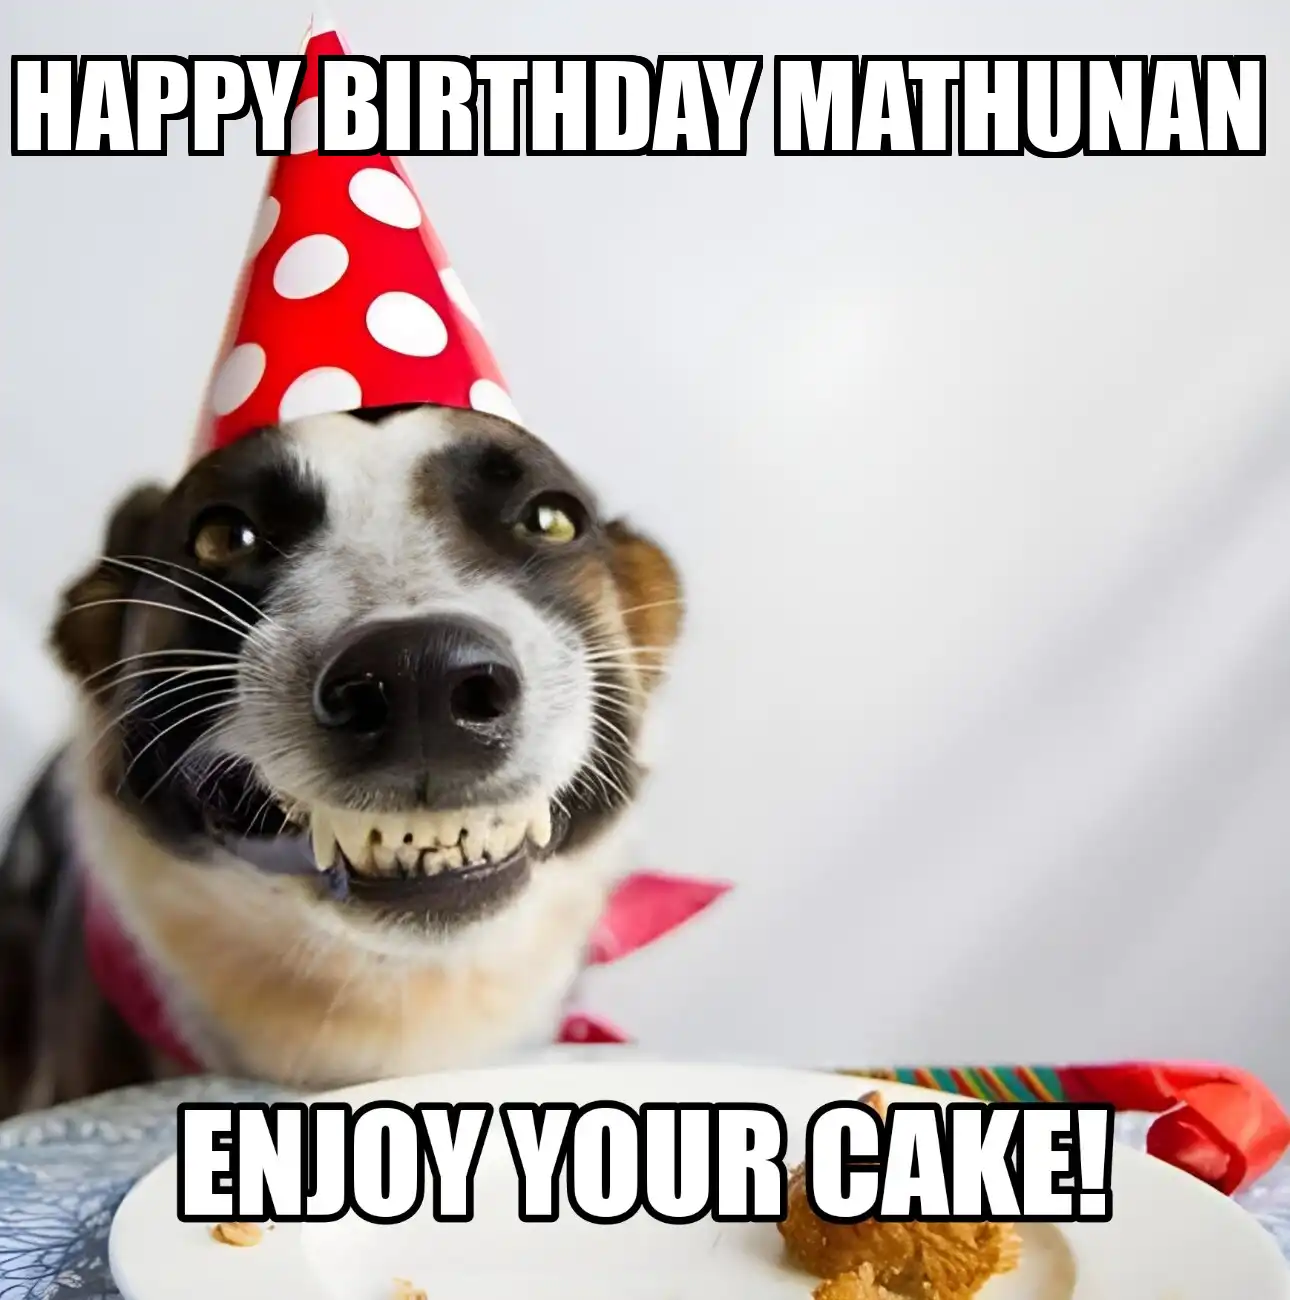 Happy Birthday Mathunan Enjoy Your Cake Dog Meme